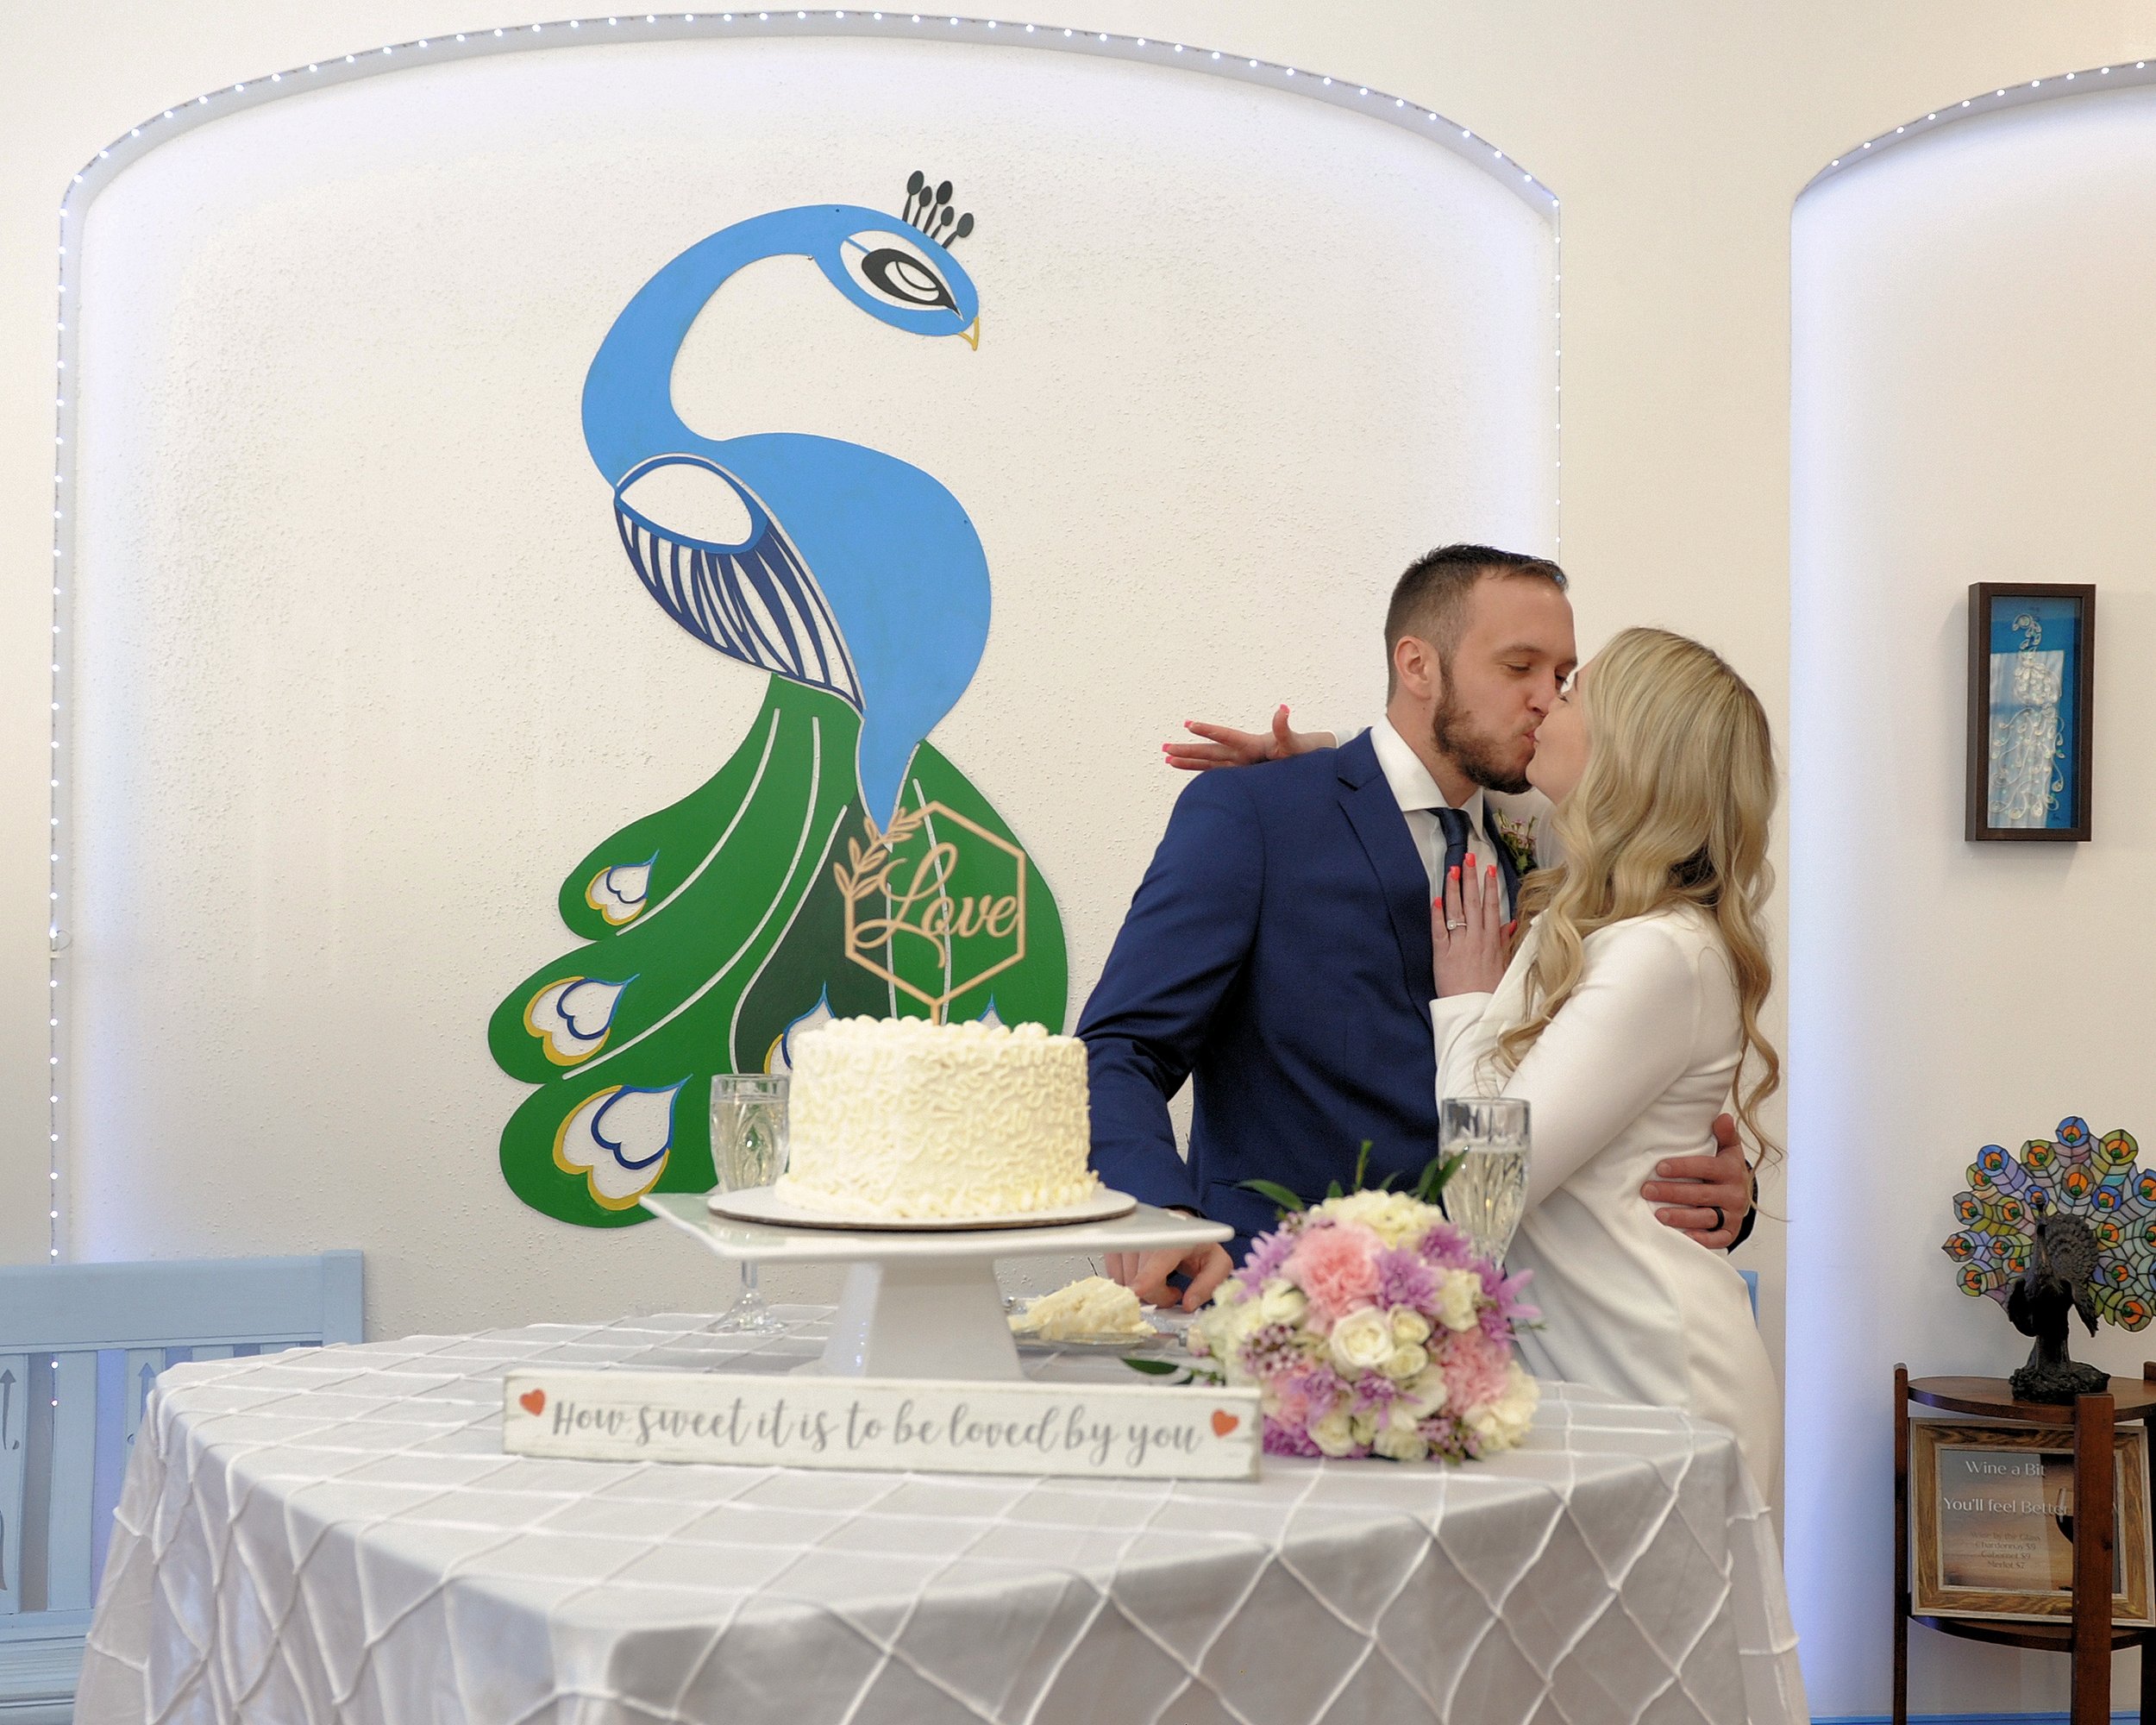 Ciao Bella Celebrations Wedding Chapel - Cake Cutting.jpg